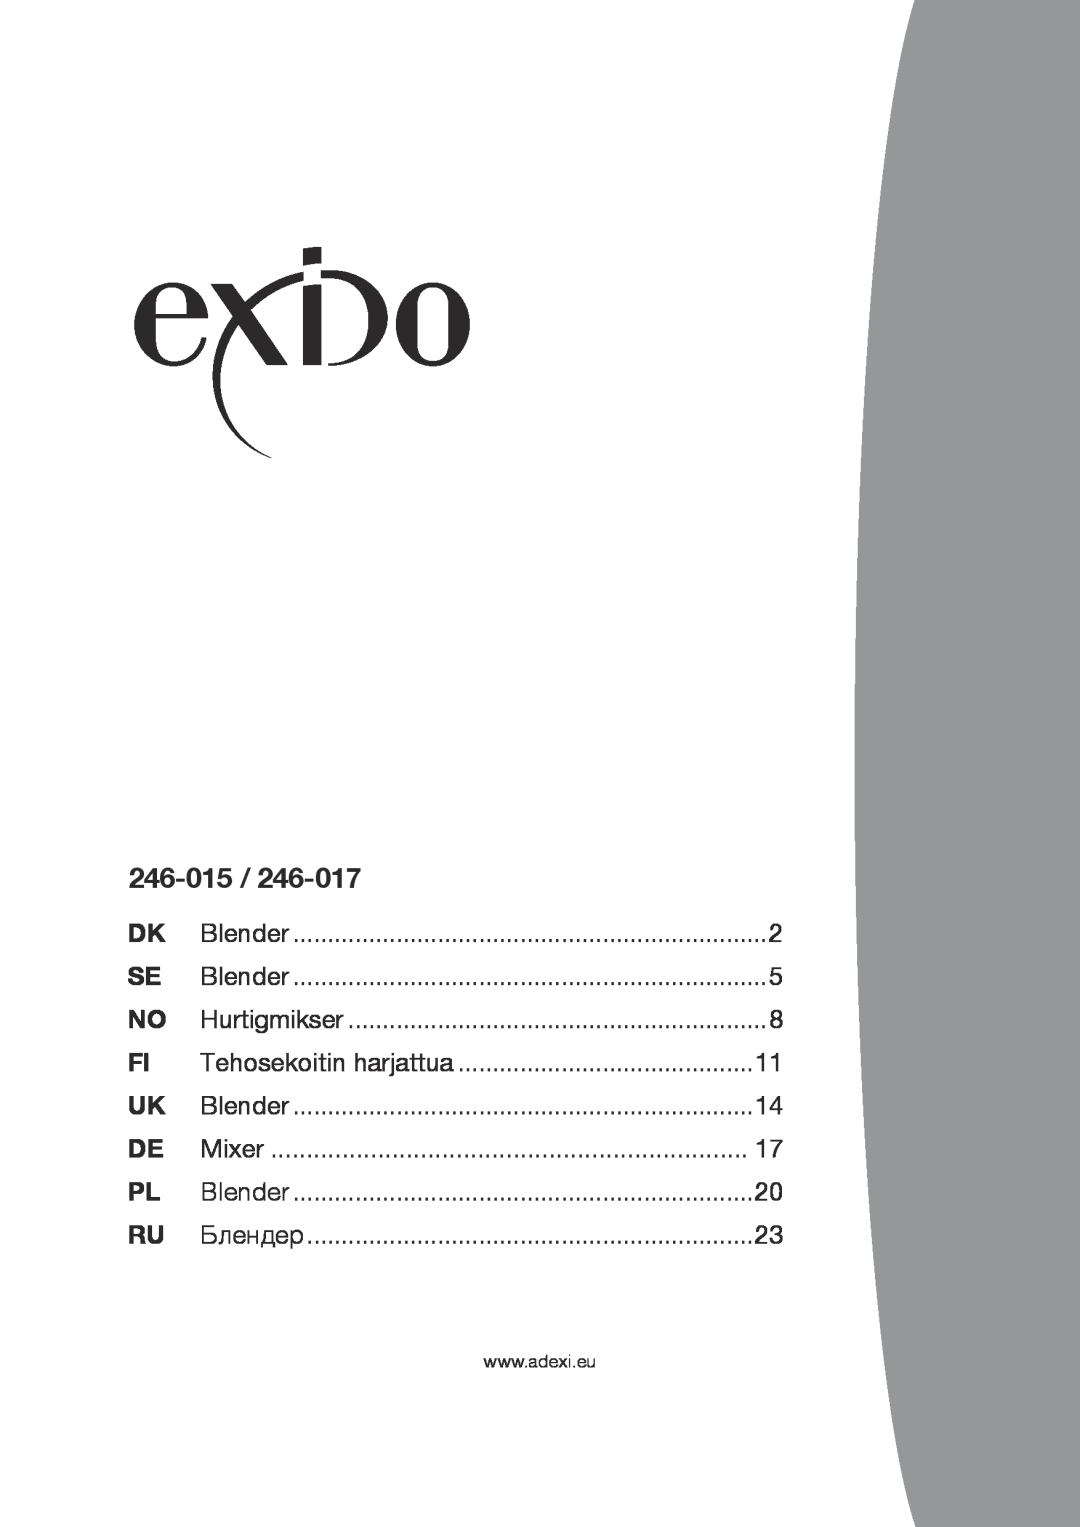 Exido 246-017 manual 246-015, Blender, Hurtigmikser, Tehosekoitin harjattua, Mixer, Блендер 